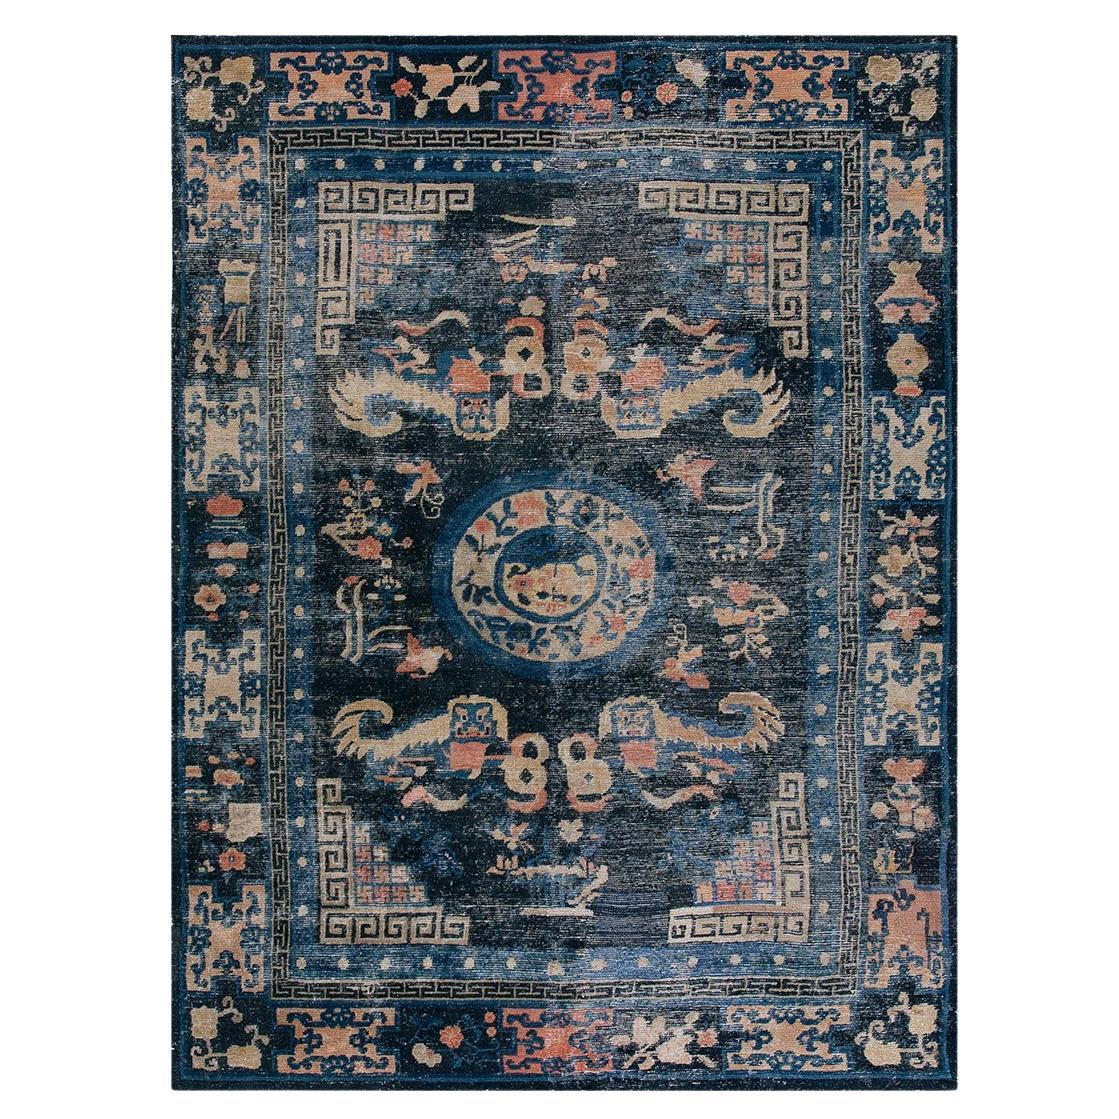 Mid 19th Century Chinese Ningxia Carpet ( 6'8" x 9'8" - 205 x 295 )